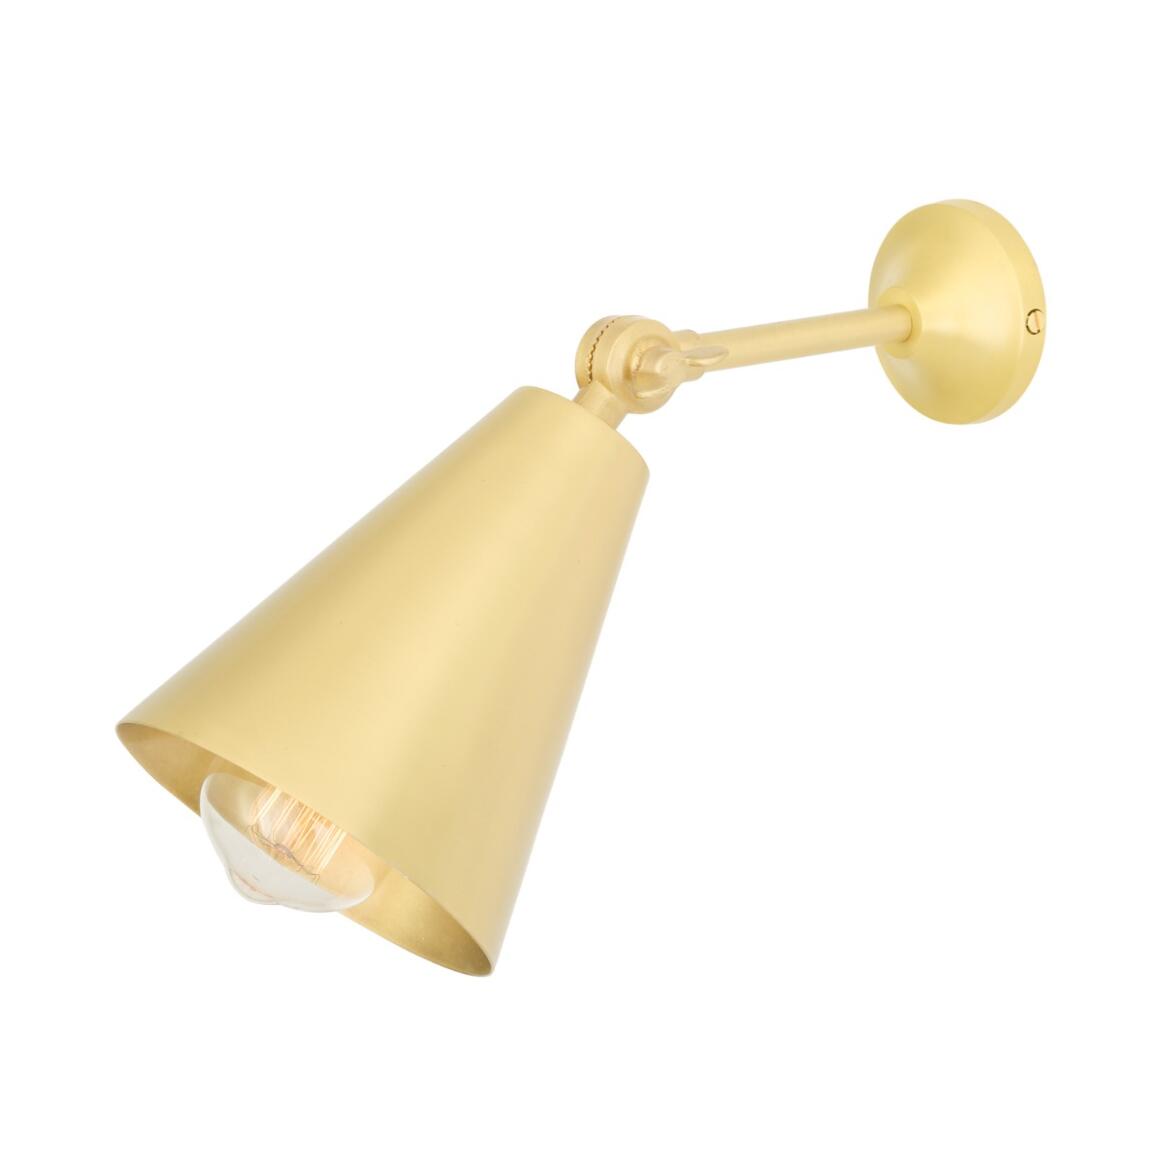 Moya Adjustable Brass Cone Wall Light main product image